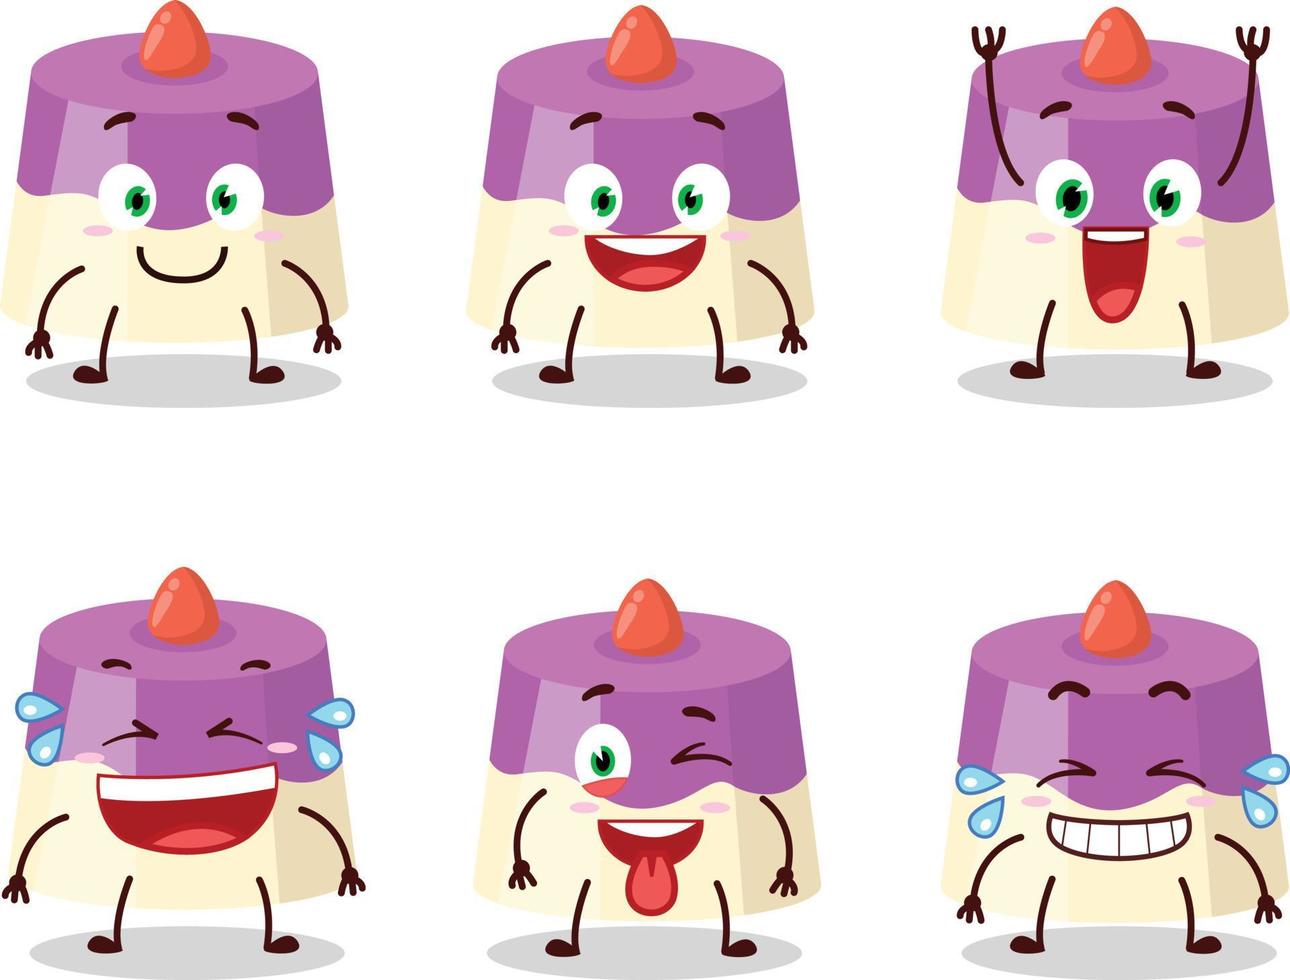 tecknad serie karaktär av kaka med leende uttryck vektor